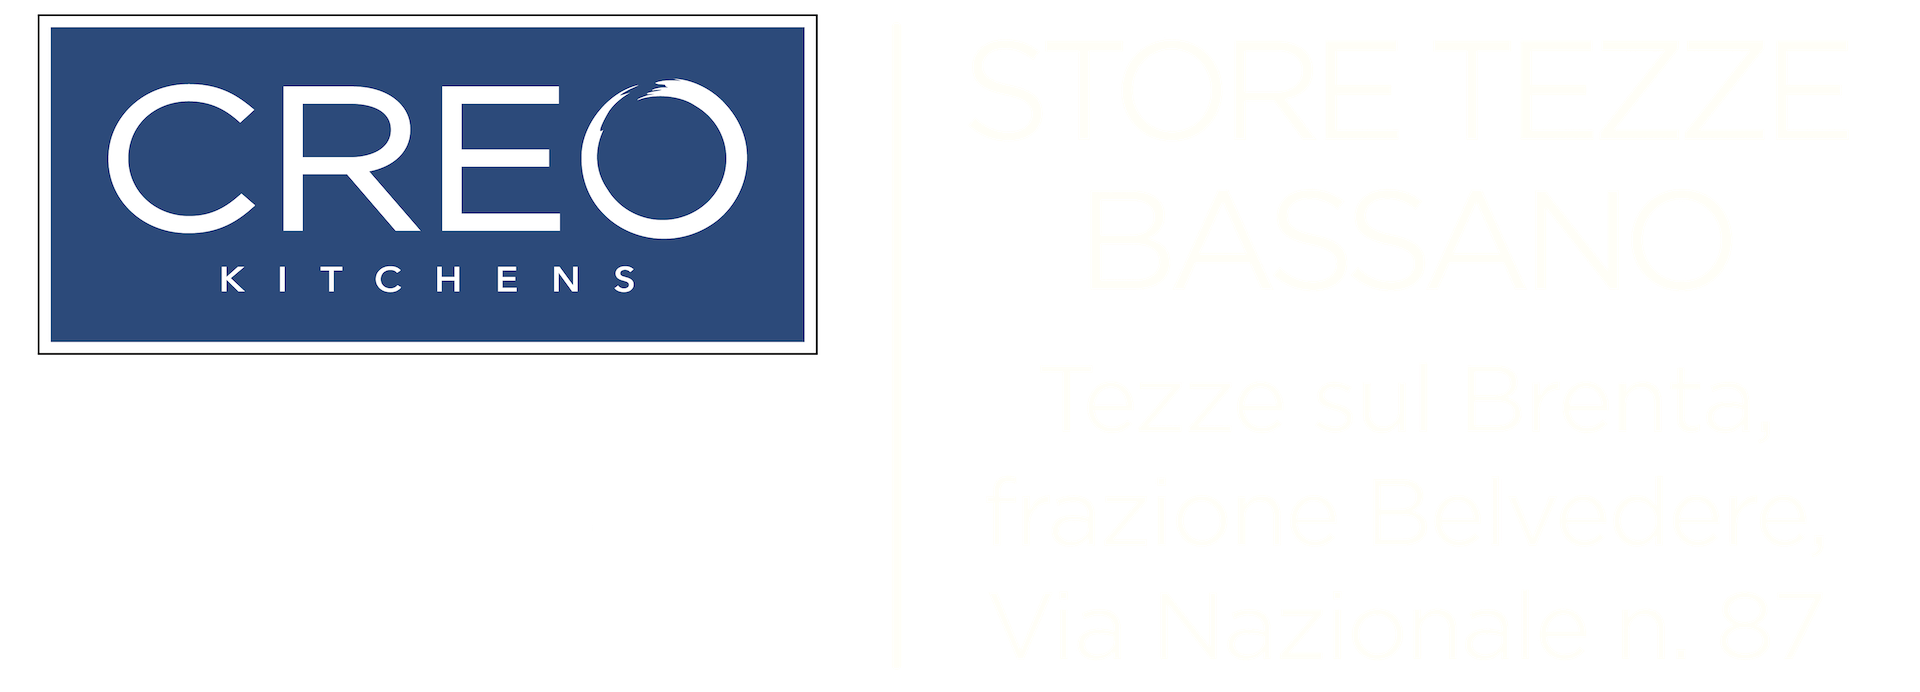 Creo Store Tezze Bassano